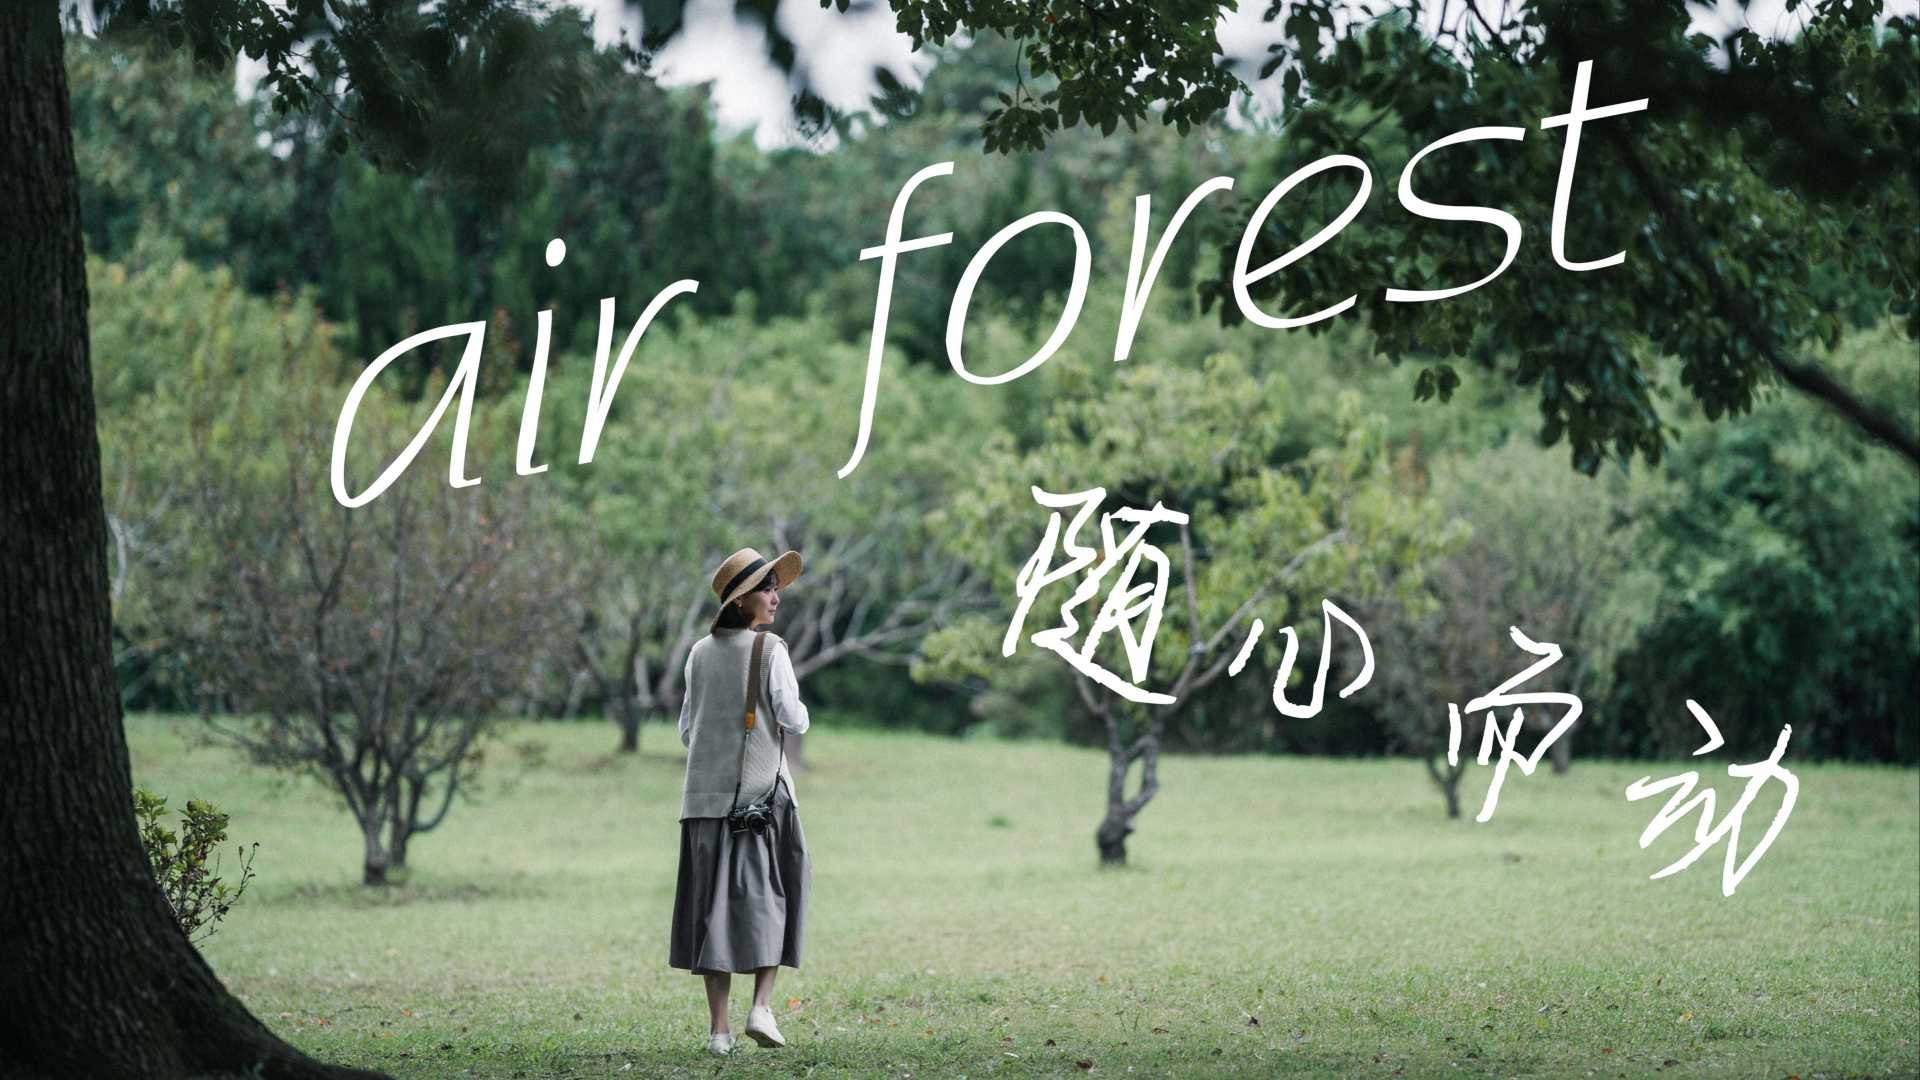 原创VLOG | 森林短片 | 随心而动《air forest》